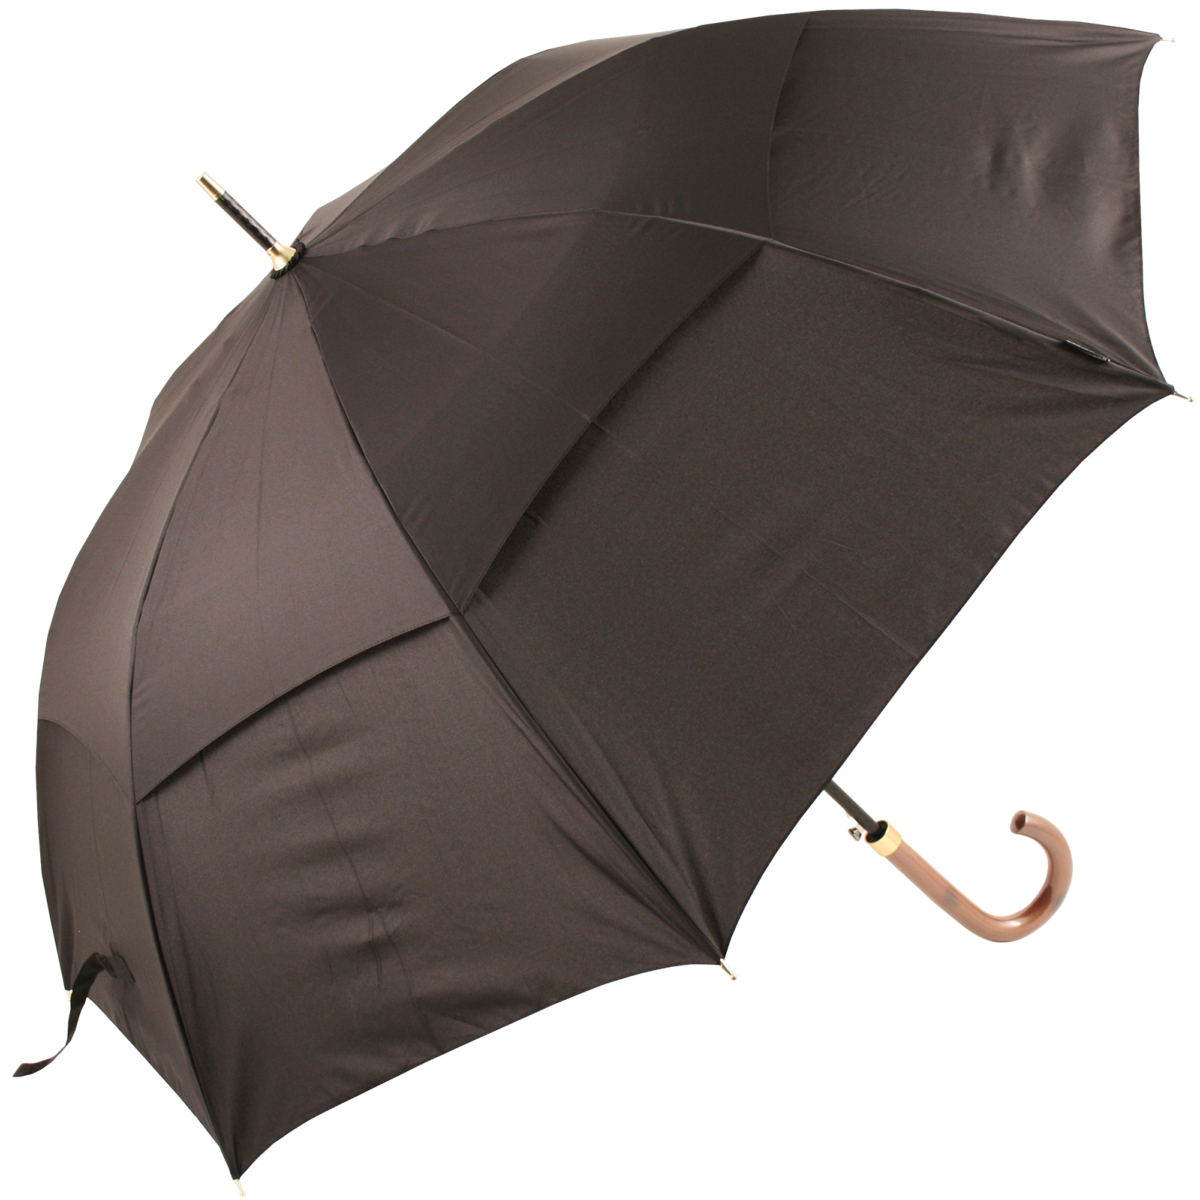 Stormking Classic 120 Black Vented Walking Length Umbrella